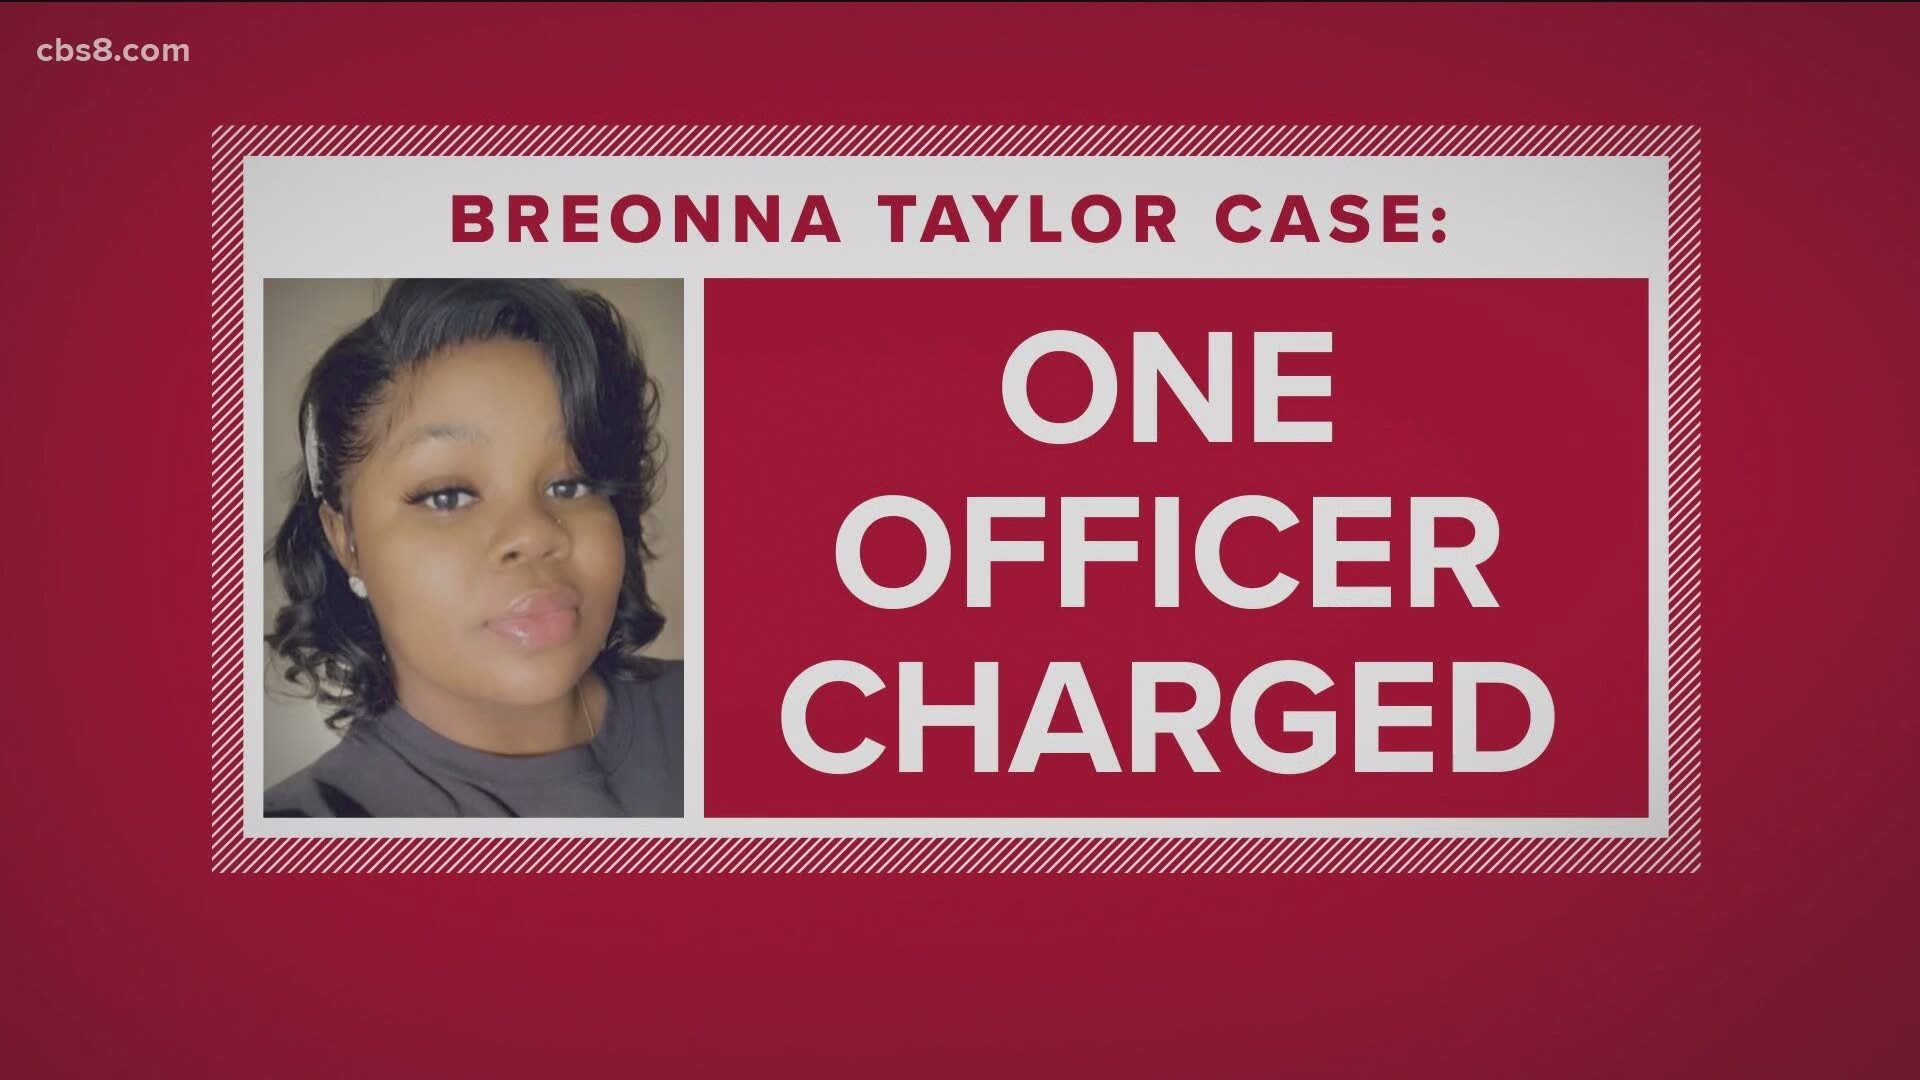 Timeline of Breonna Taylor case